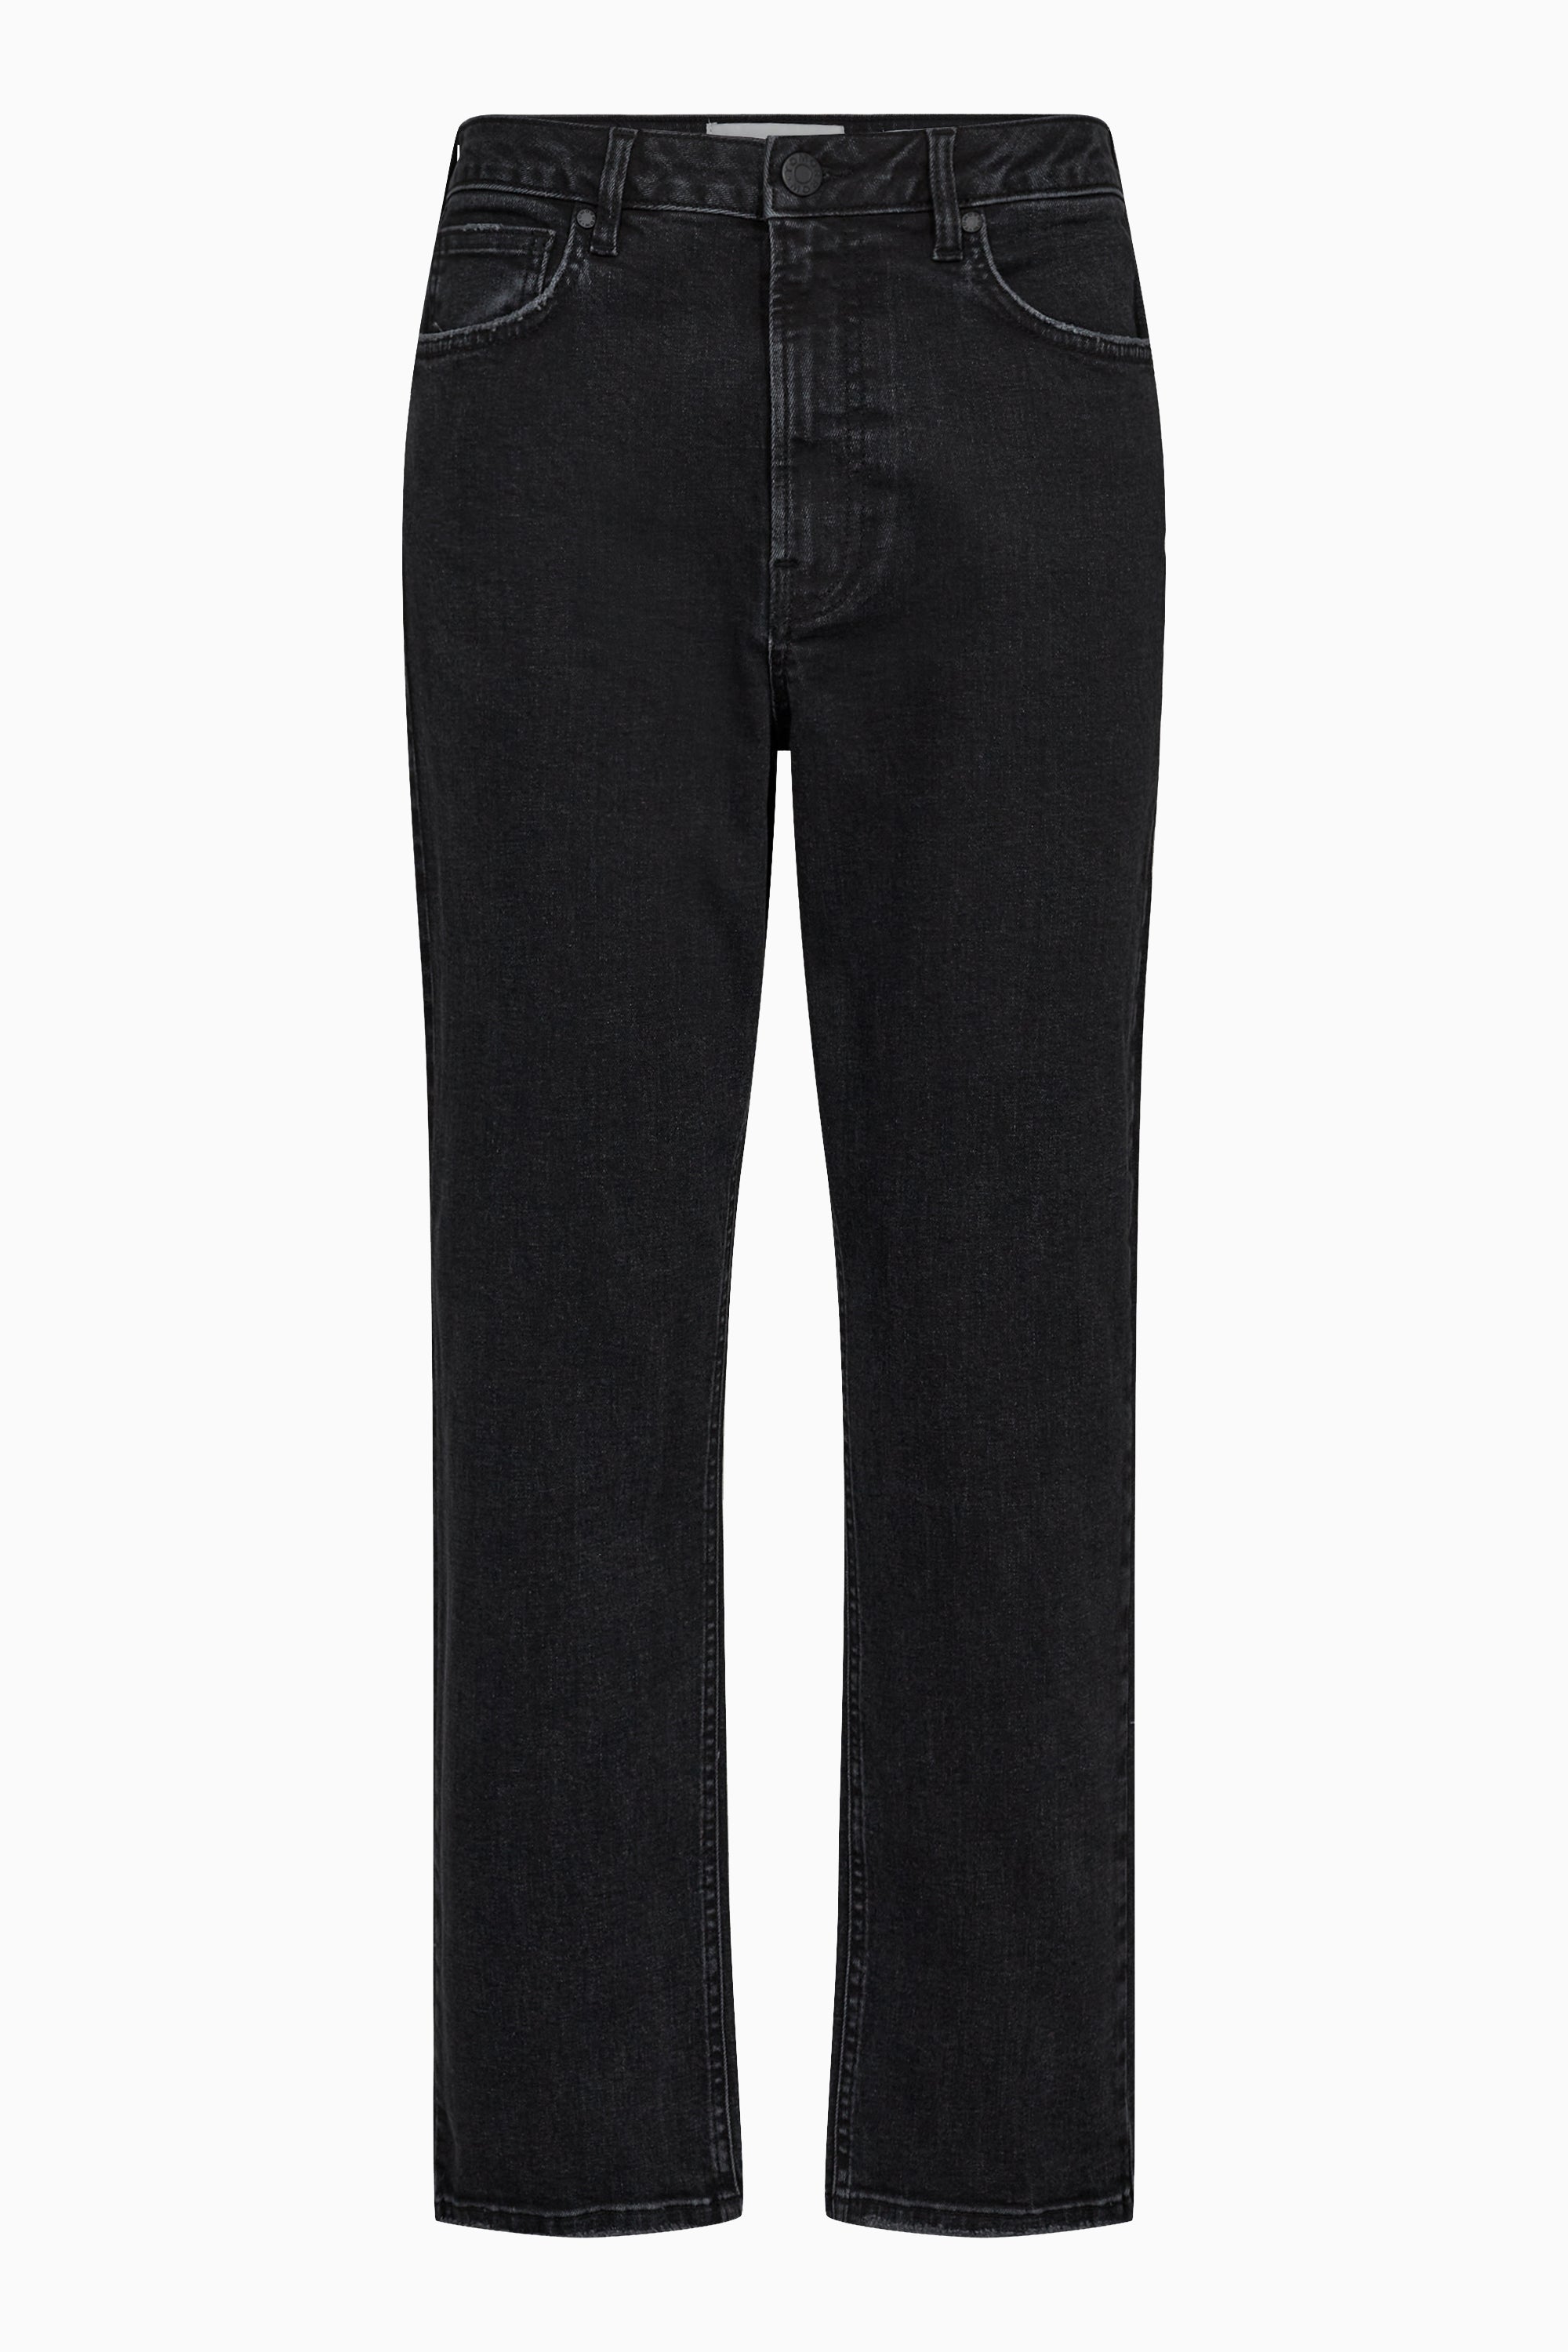 Tomorrow TMRW Hailey Jeans - Original Black Jeans & Pants 9 Black